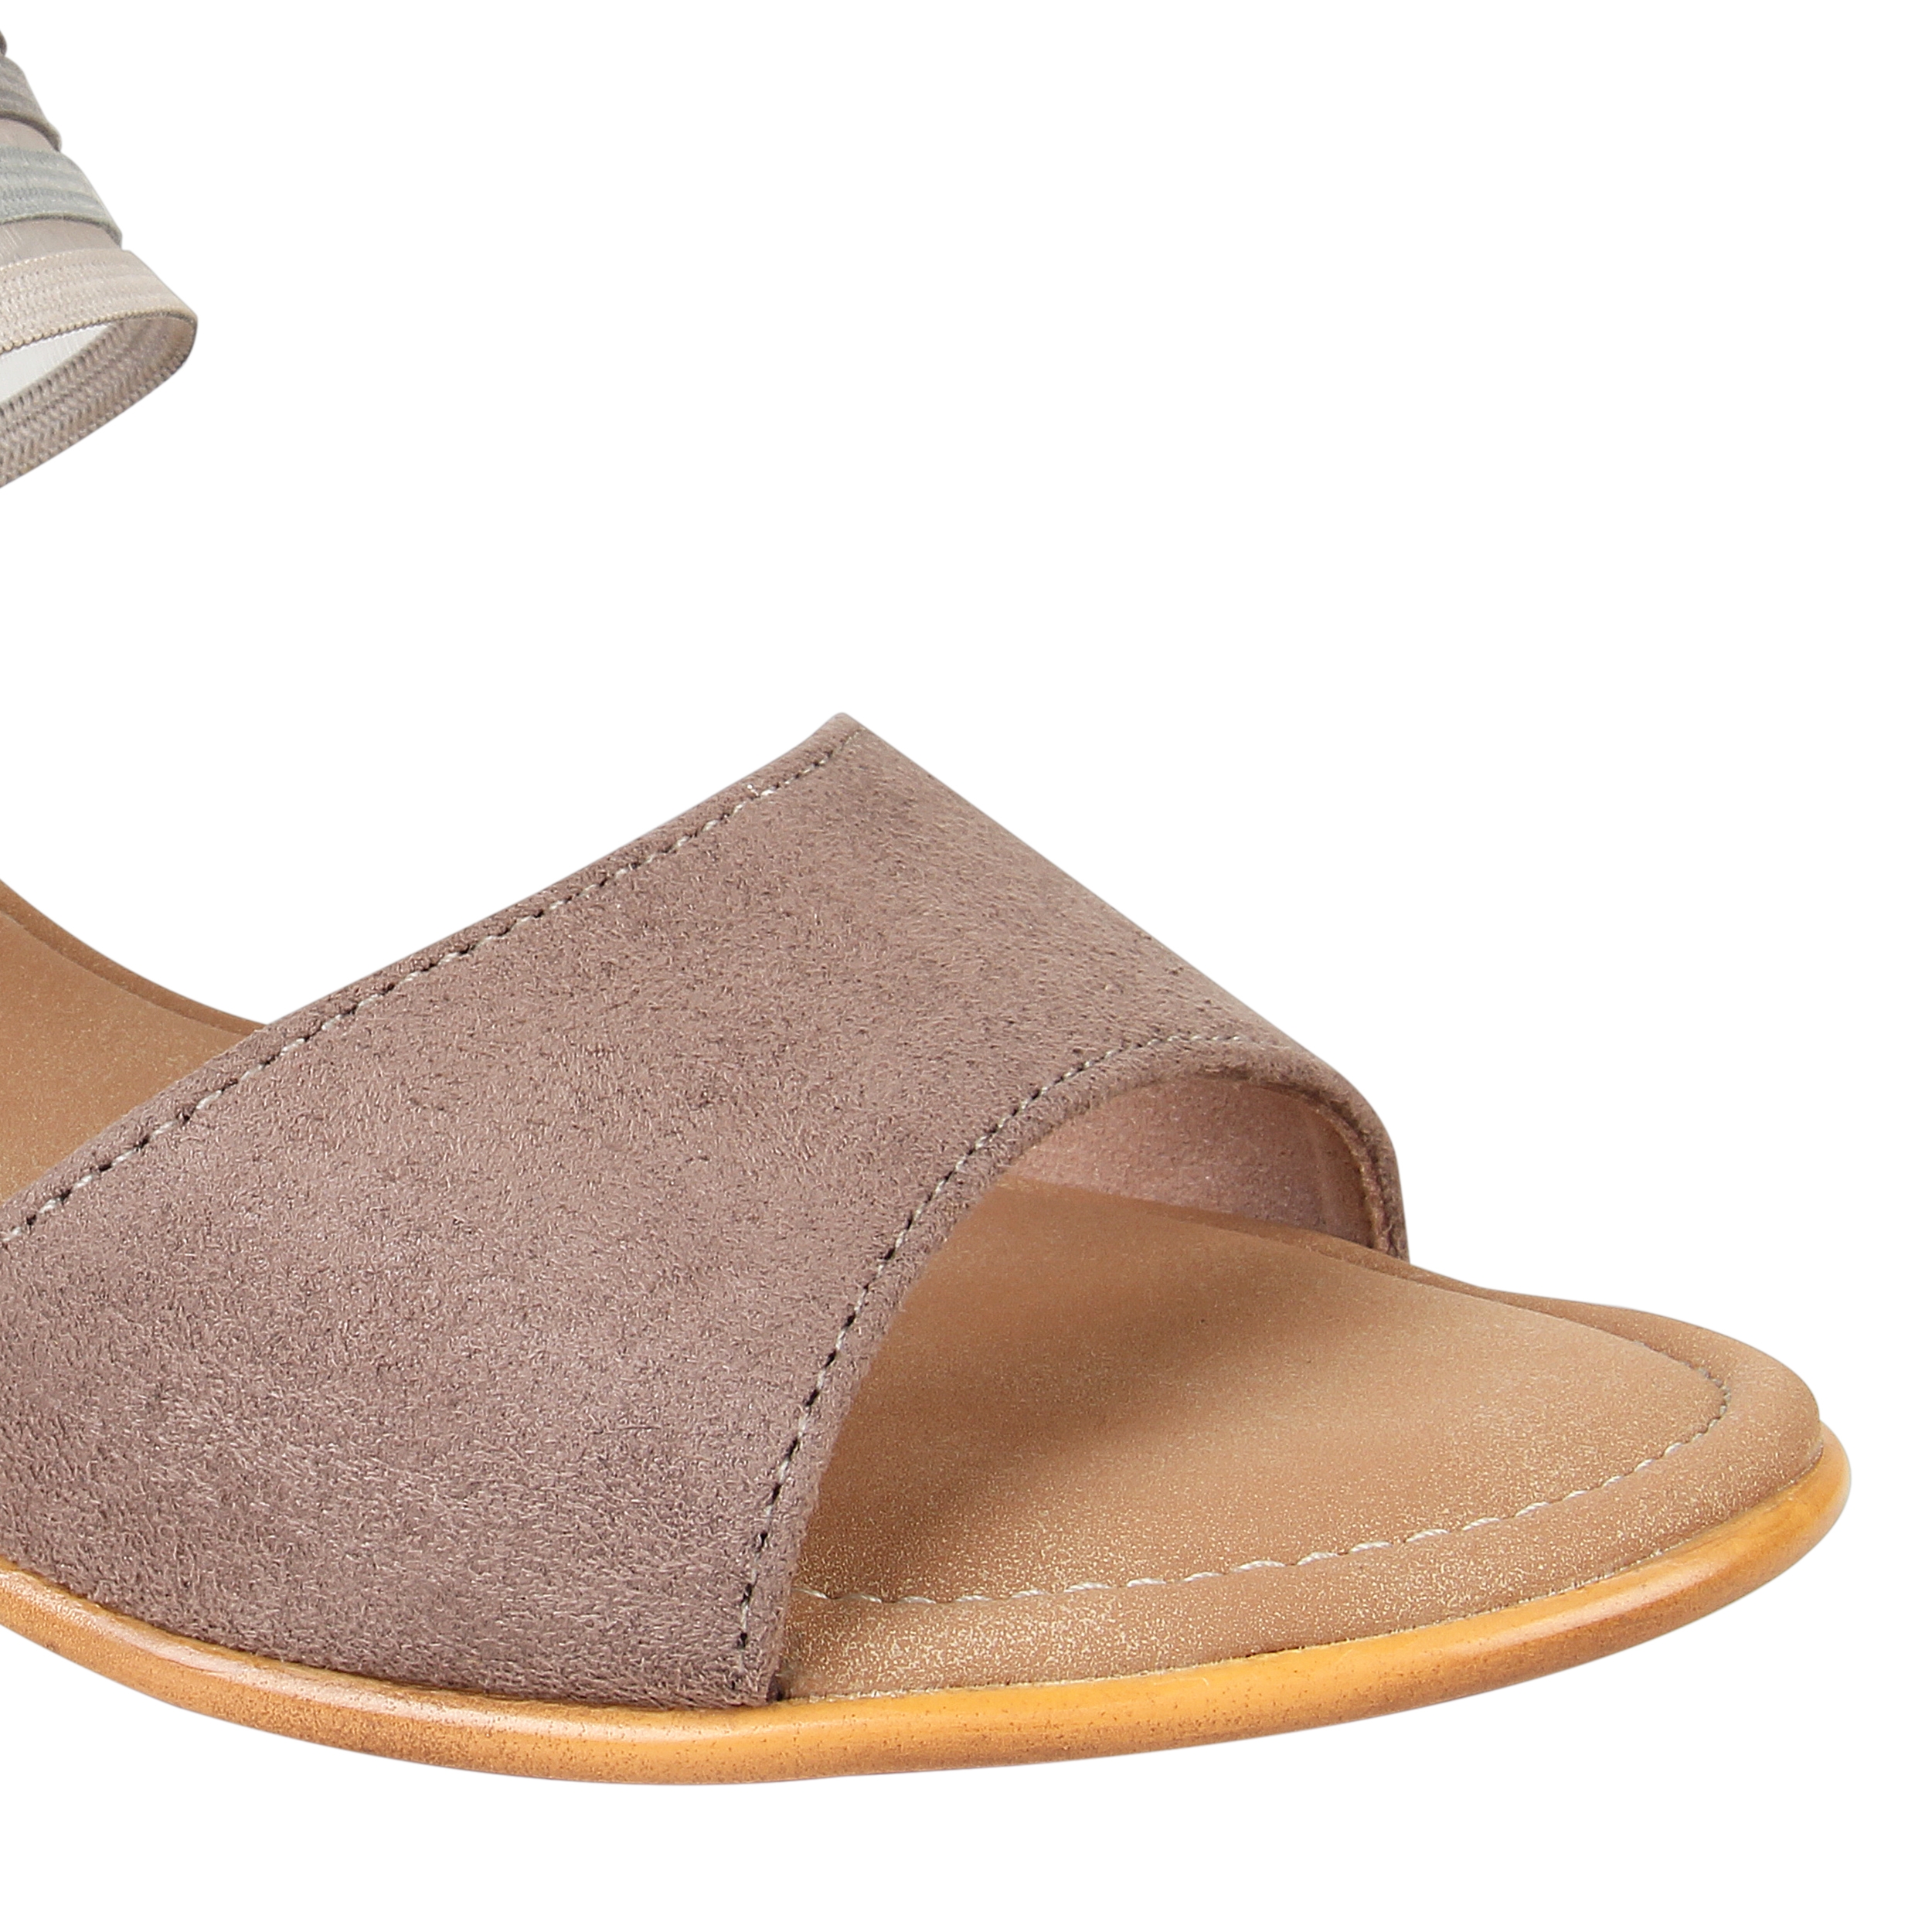 CATWALK | Taupe Multi Strap Sandals